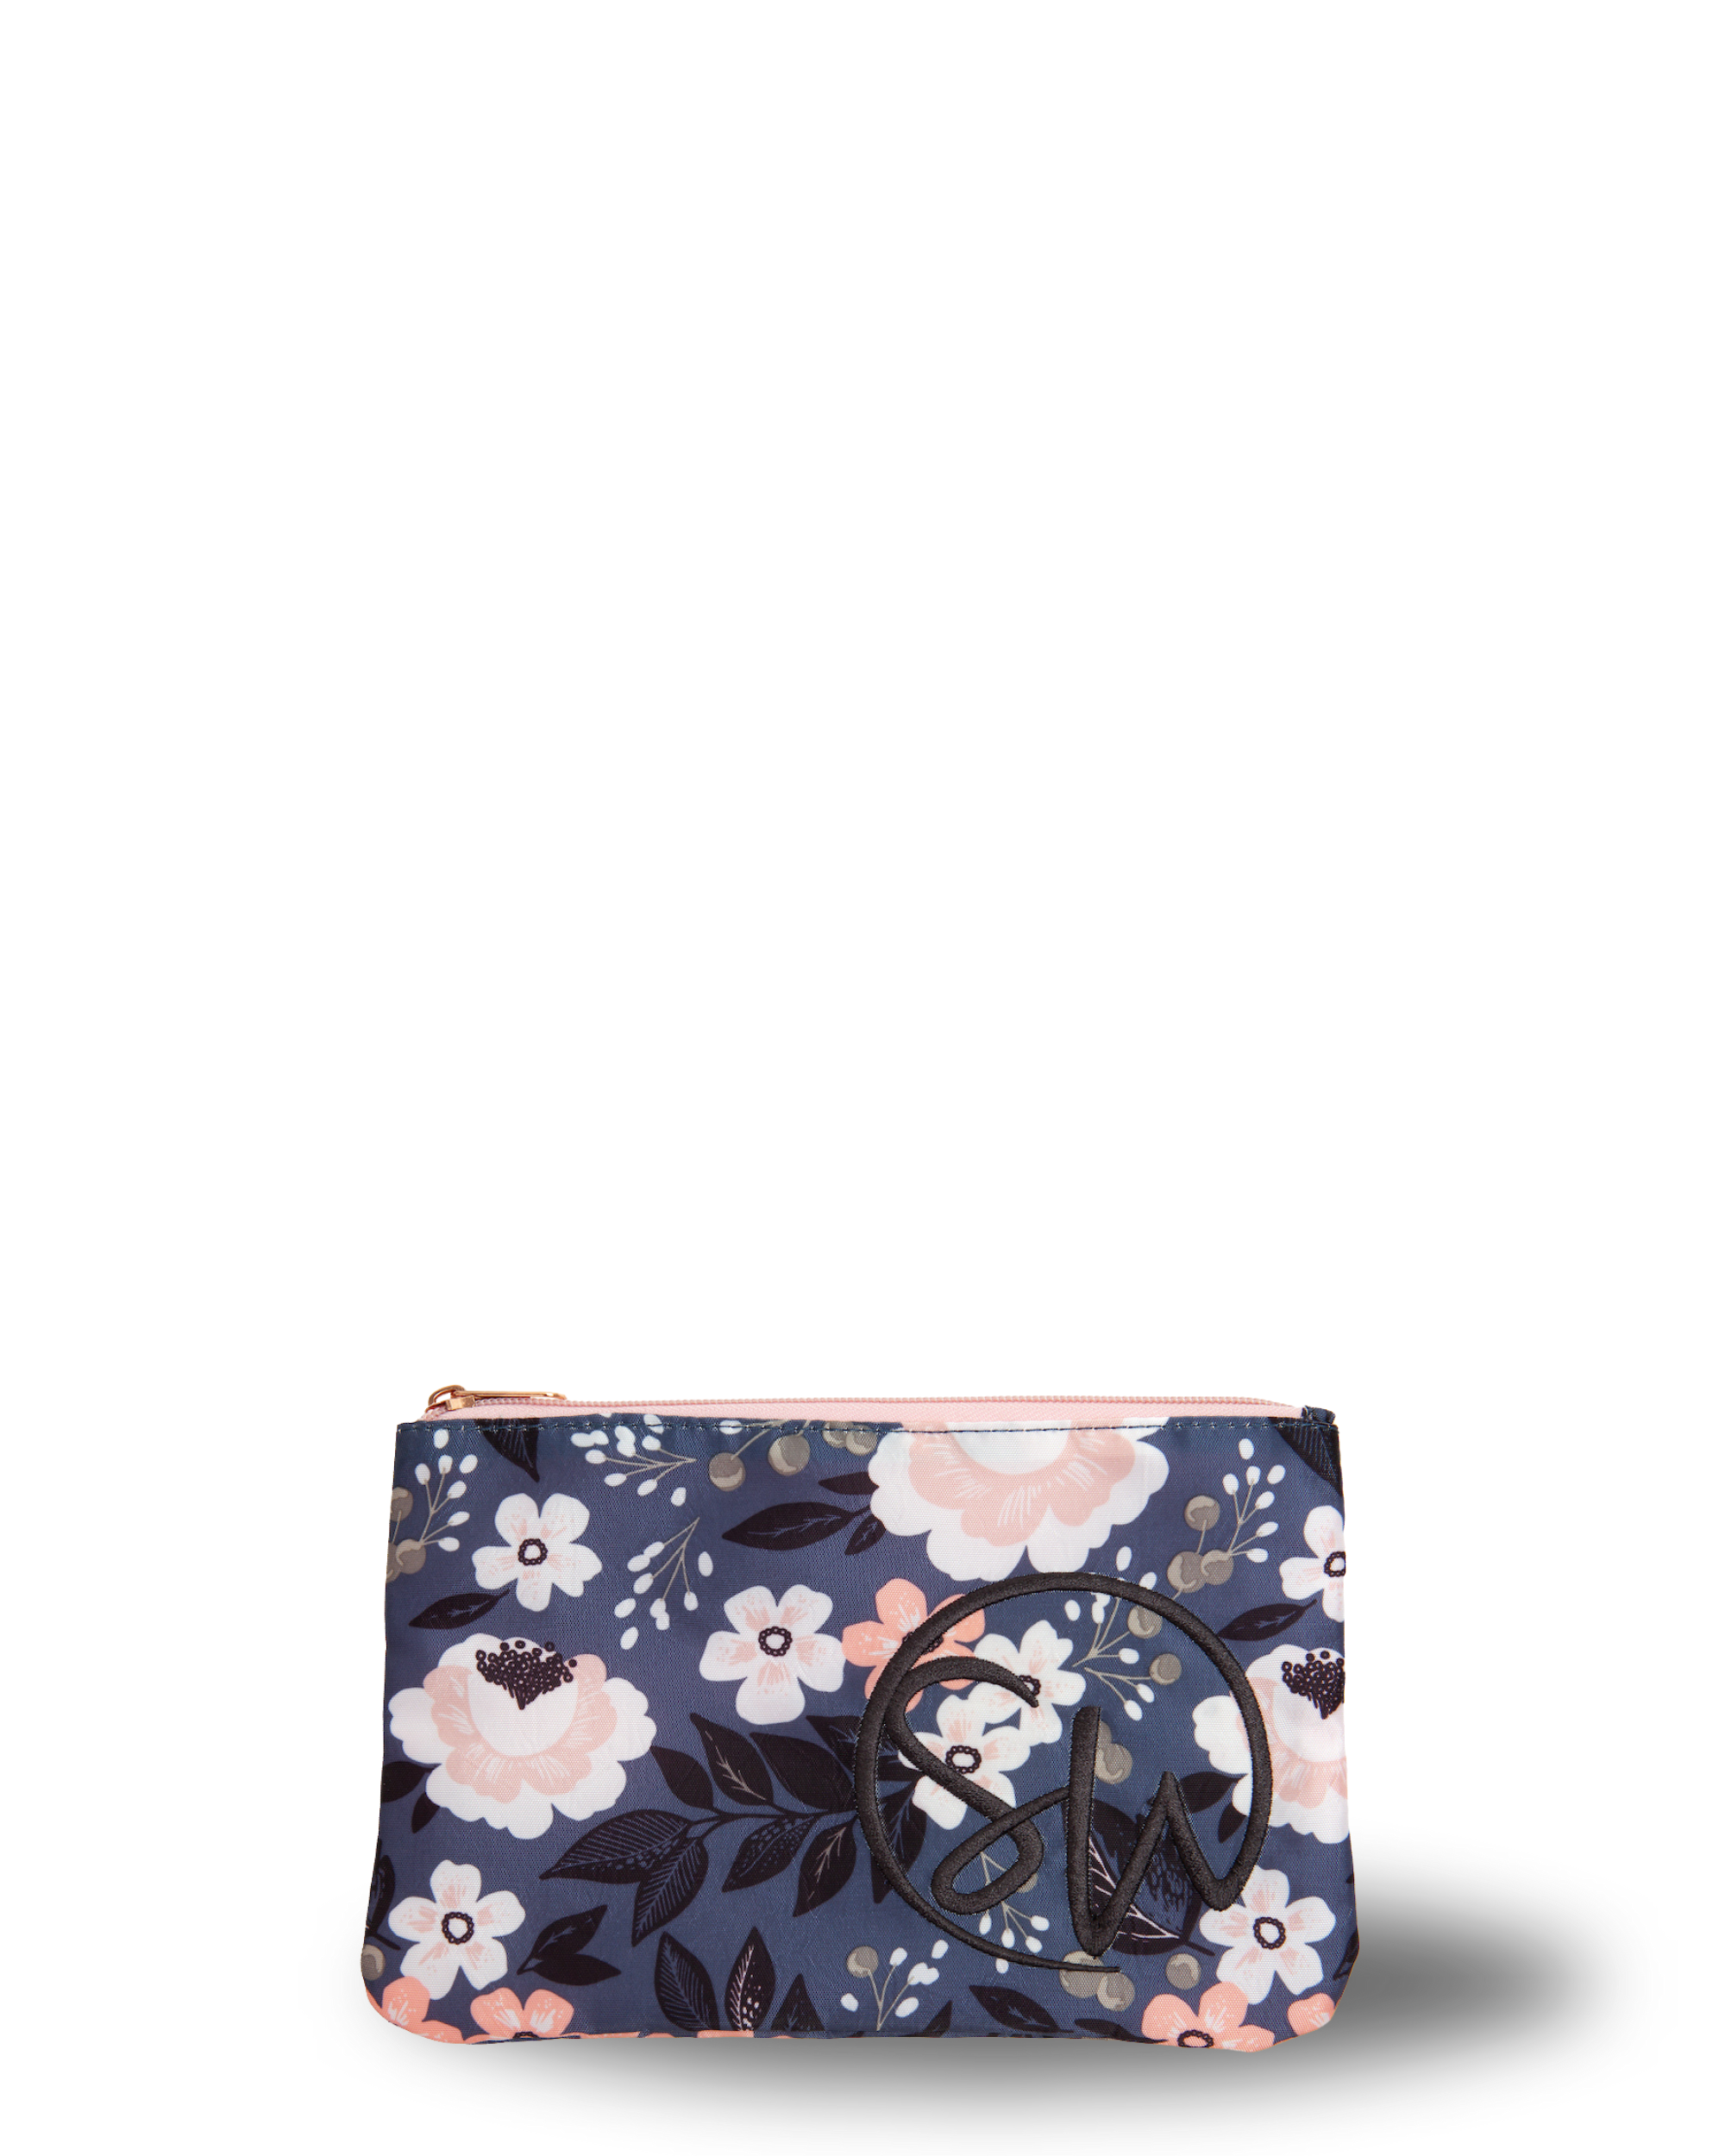 SWag Bag (Le Floral)